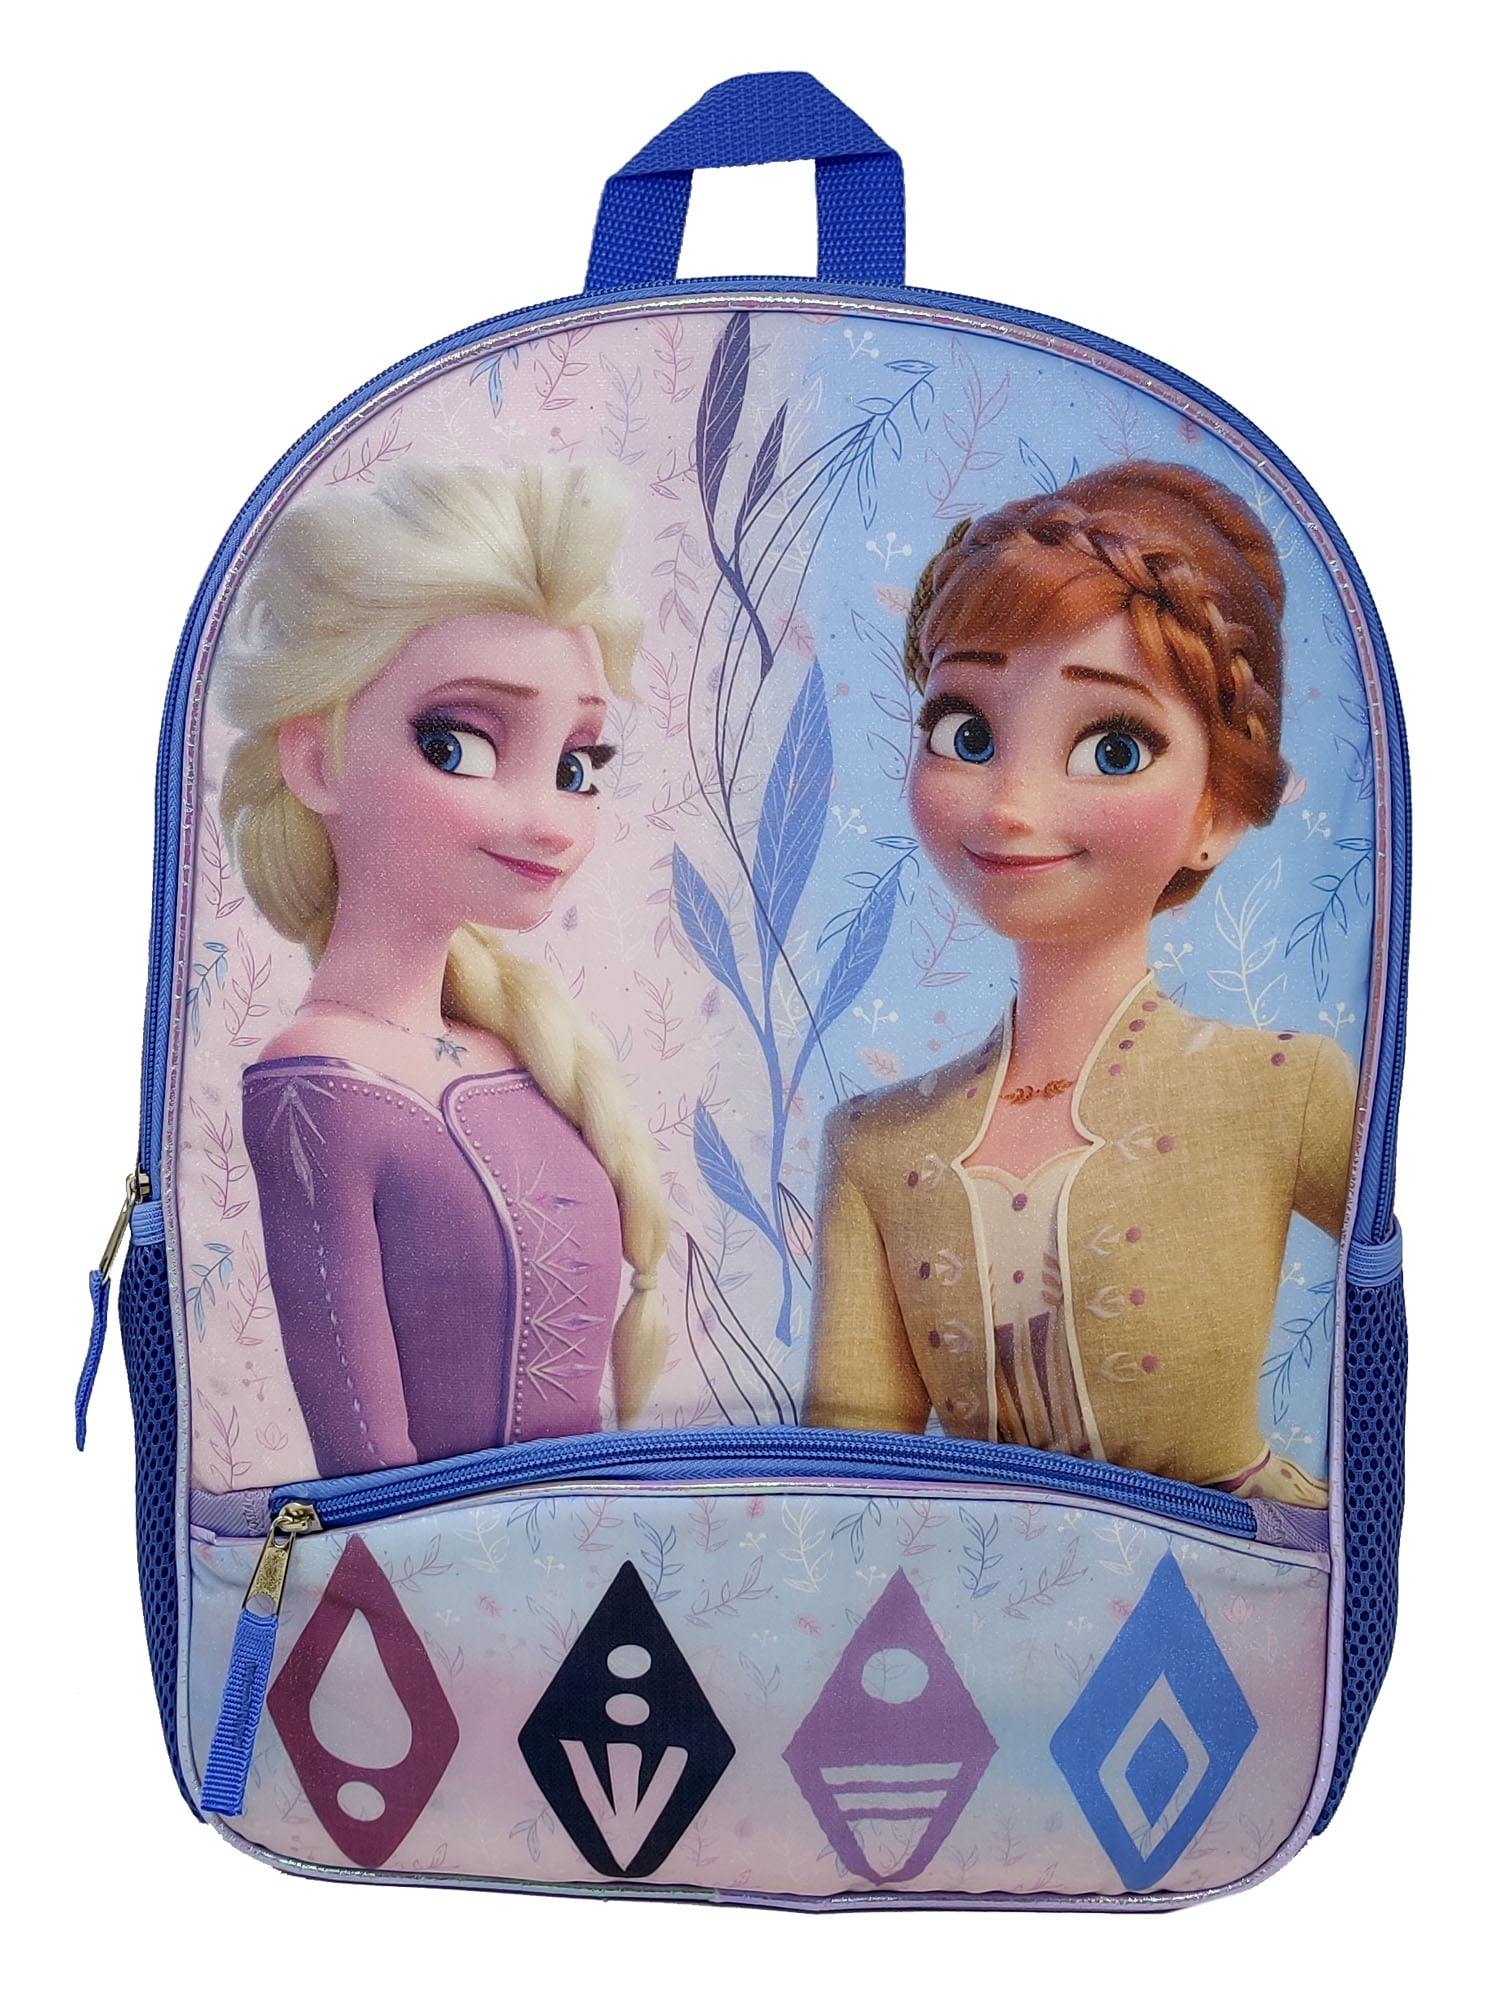 Anna Elsa Princesses Ideal Party Bag Fillers. 3 pack of Disney Frozen Keyrings 